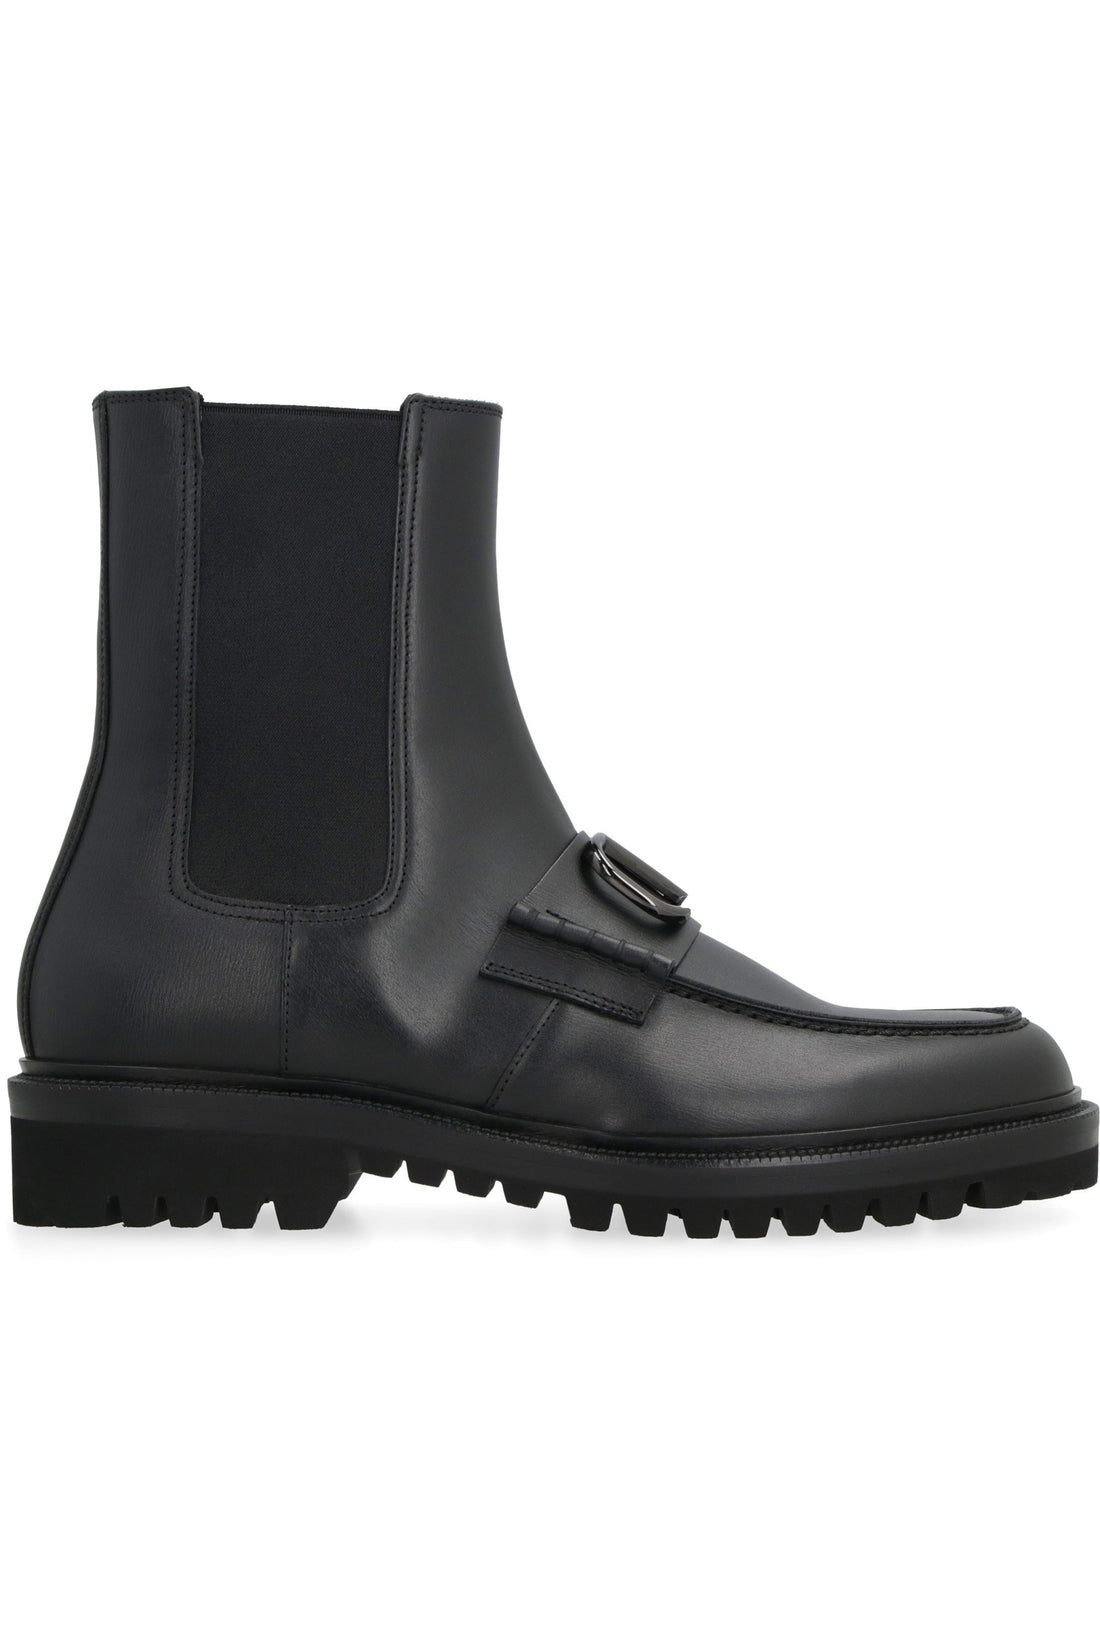 Valentino-OUTLET-SALE-Valentino Garavani - VLogo leather Chelsea boots-ARCHIVIST